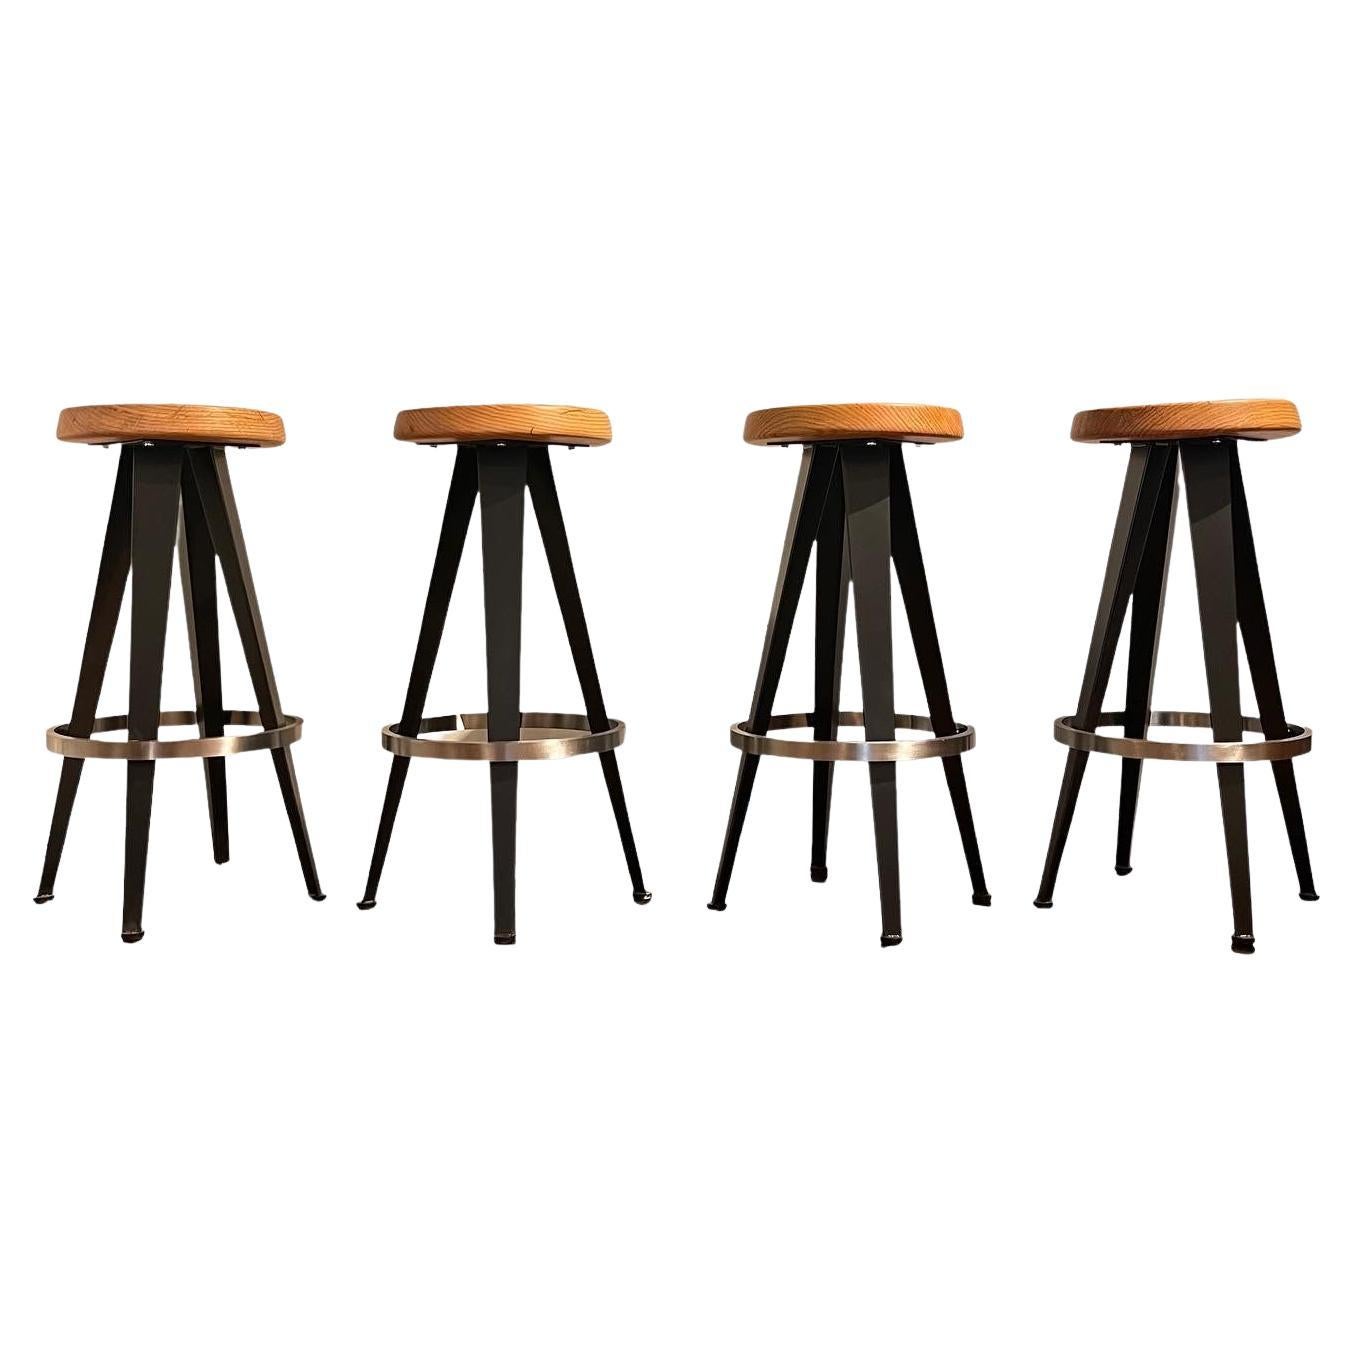 Jean Prouvé Bar stools (after) set of 4x or individual 